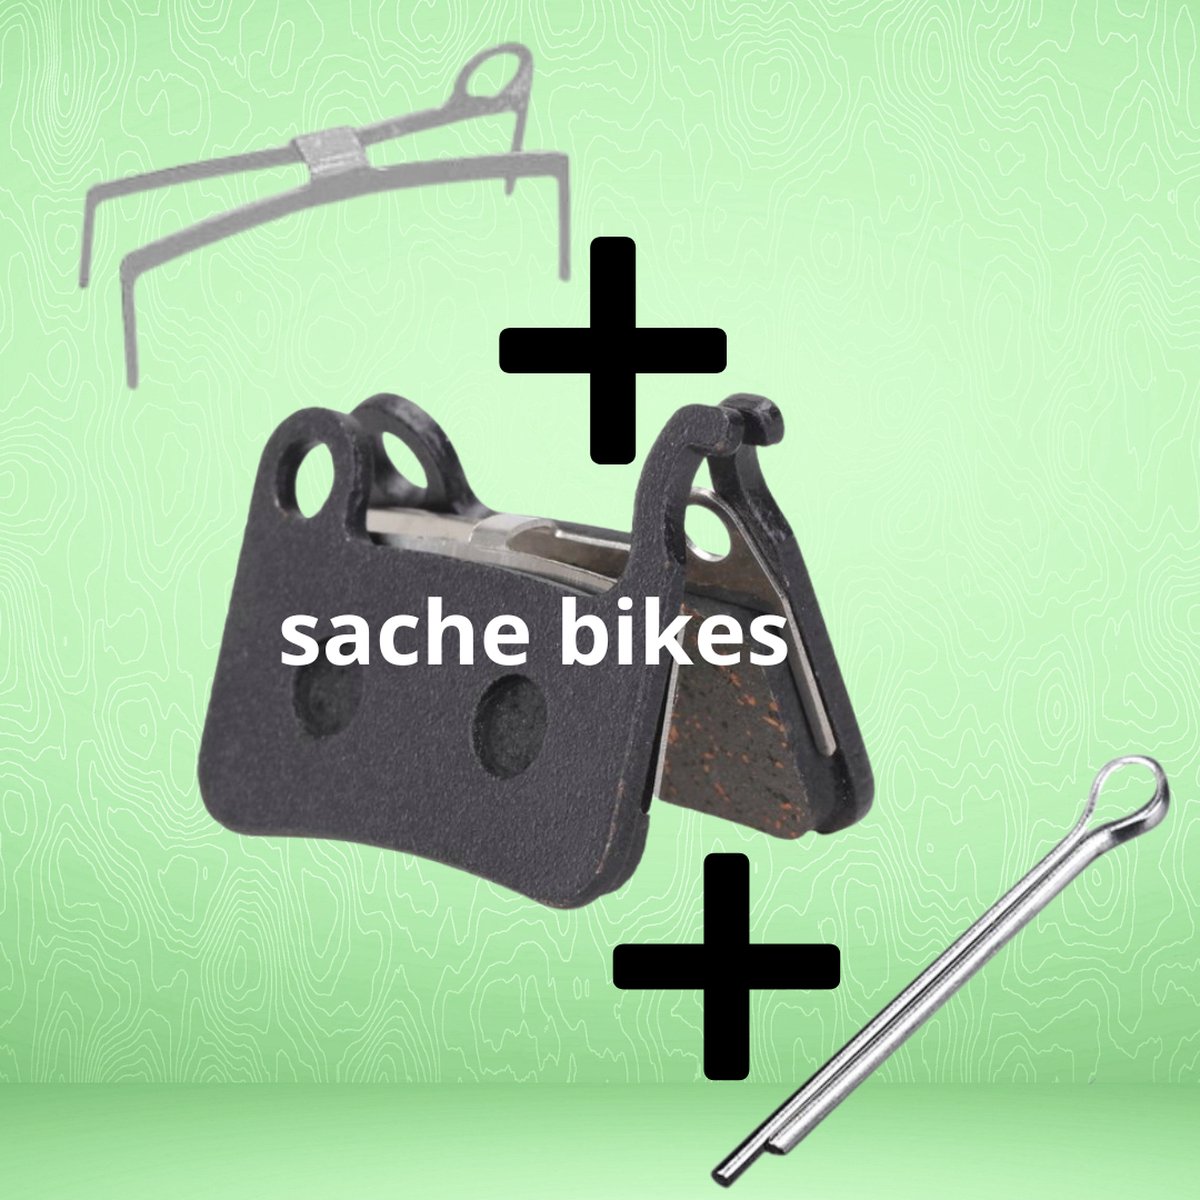 Fatbike remblokken met bevestiging en splitpen - Hydraulische remblokken - Hydraulic brake pads - Izoom - Zoom - Logan - Ebike - Mountainbike - Sache Bikes